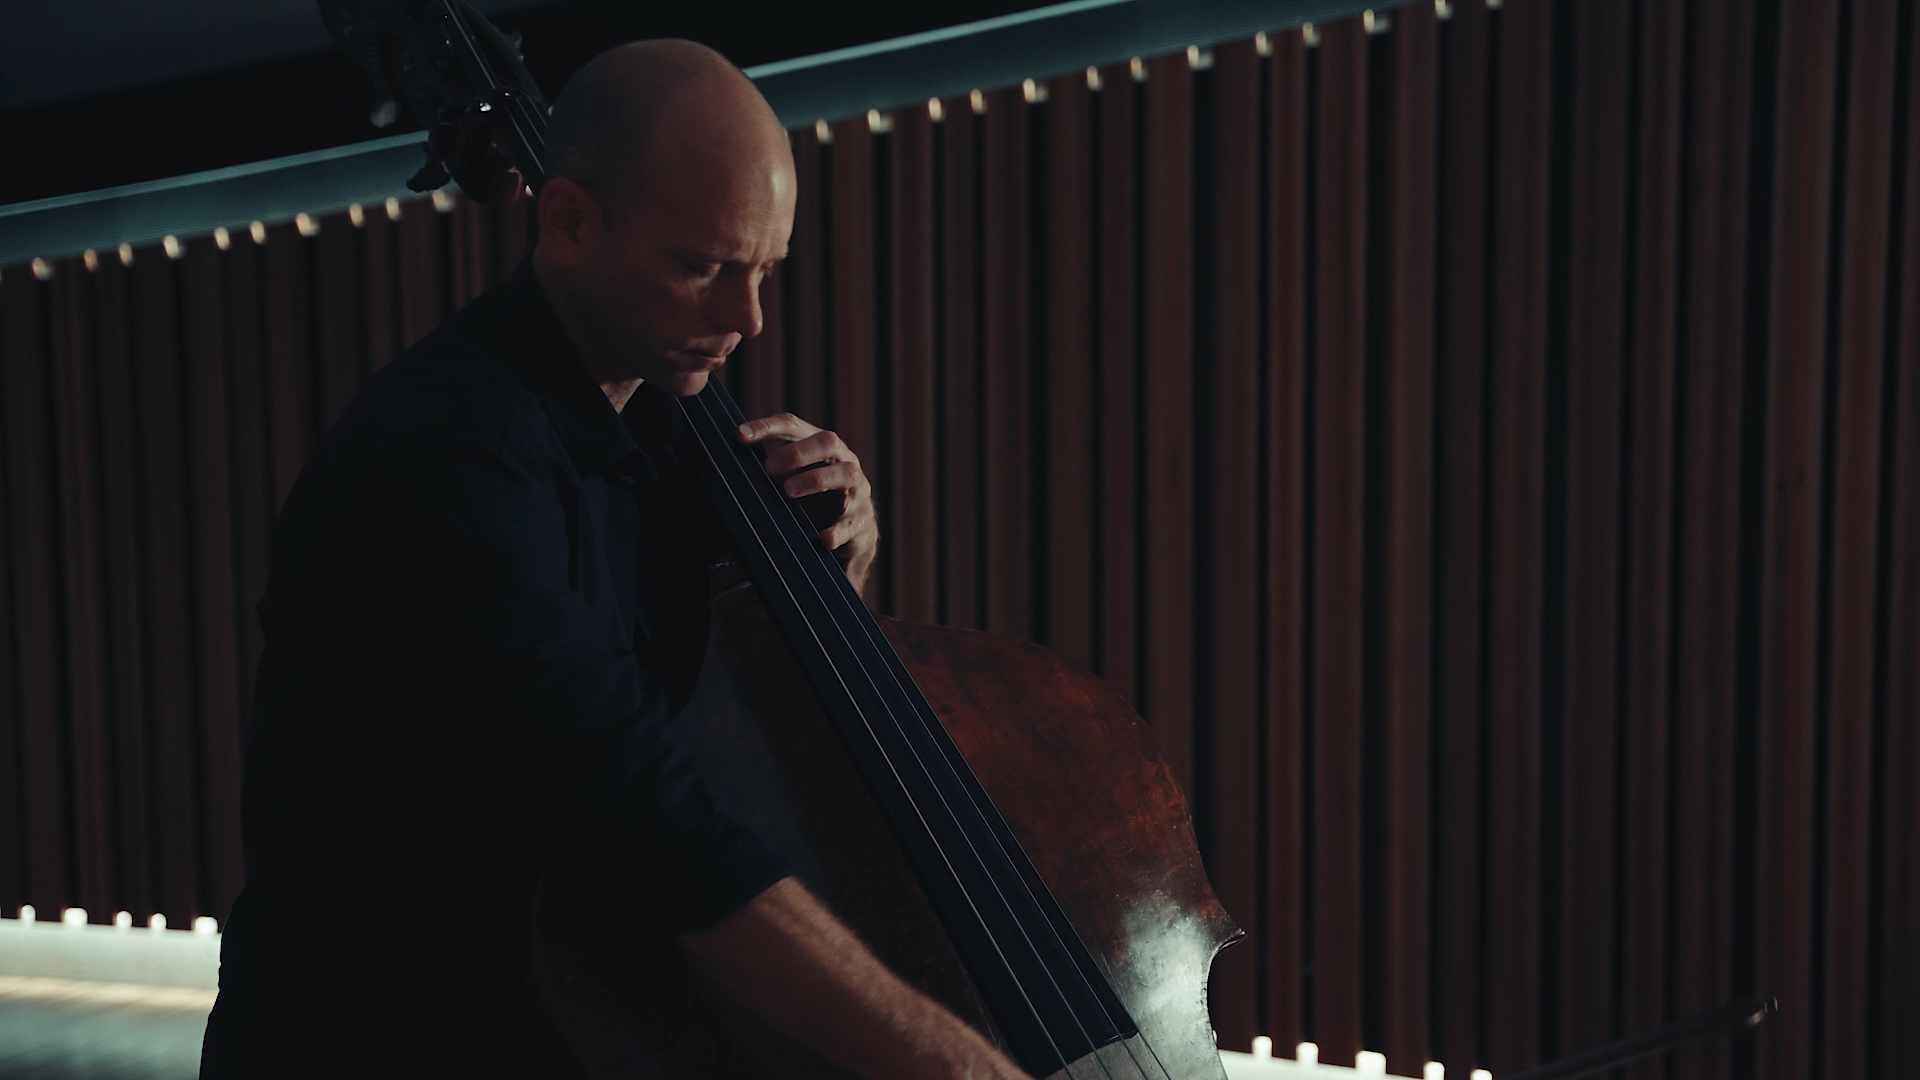 Double Bass: Maxime Bibeau, Australian Chamber Orchestra, French Bow, Maple Wood Corpus. 1920x1080 Full HD Background.